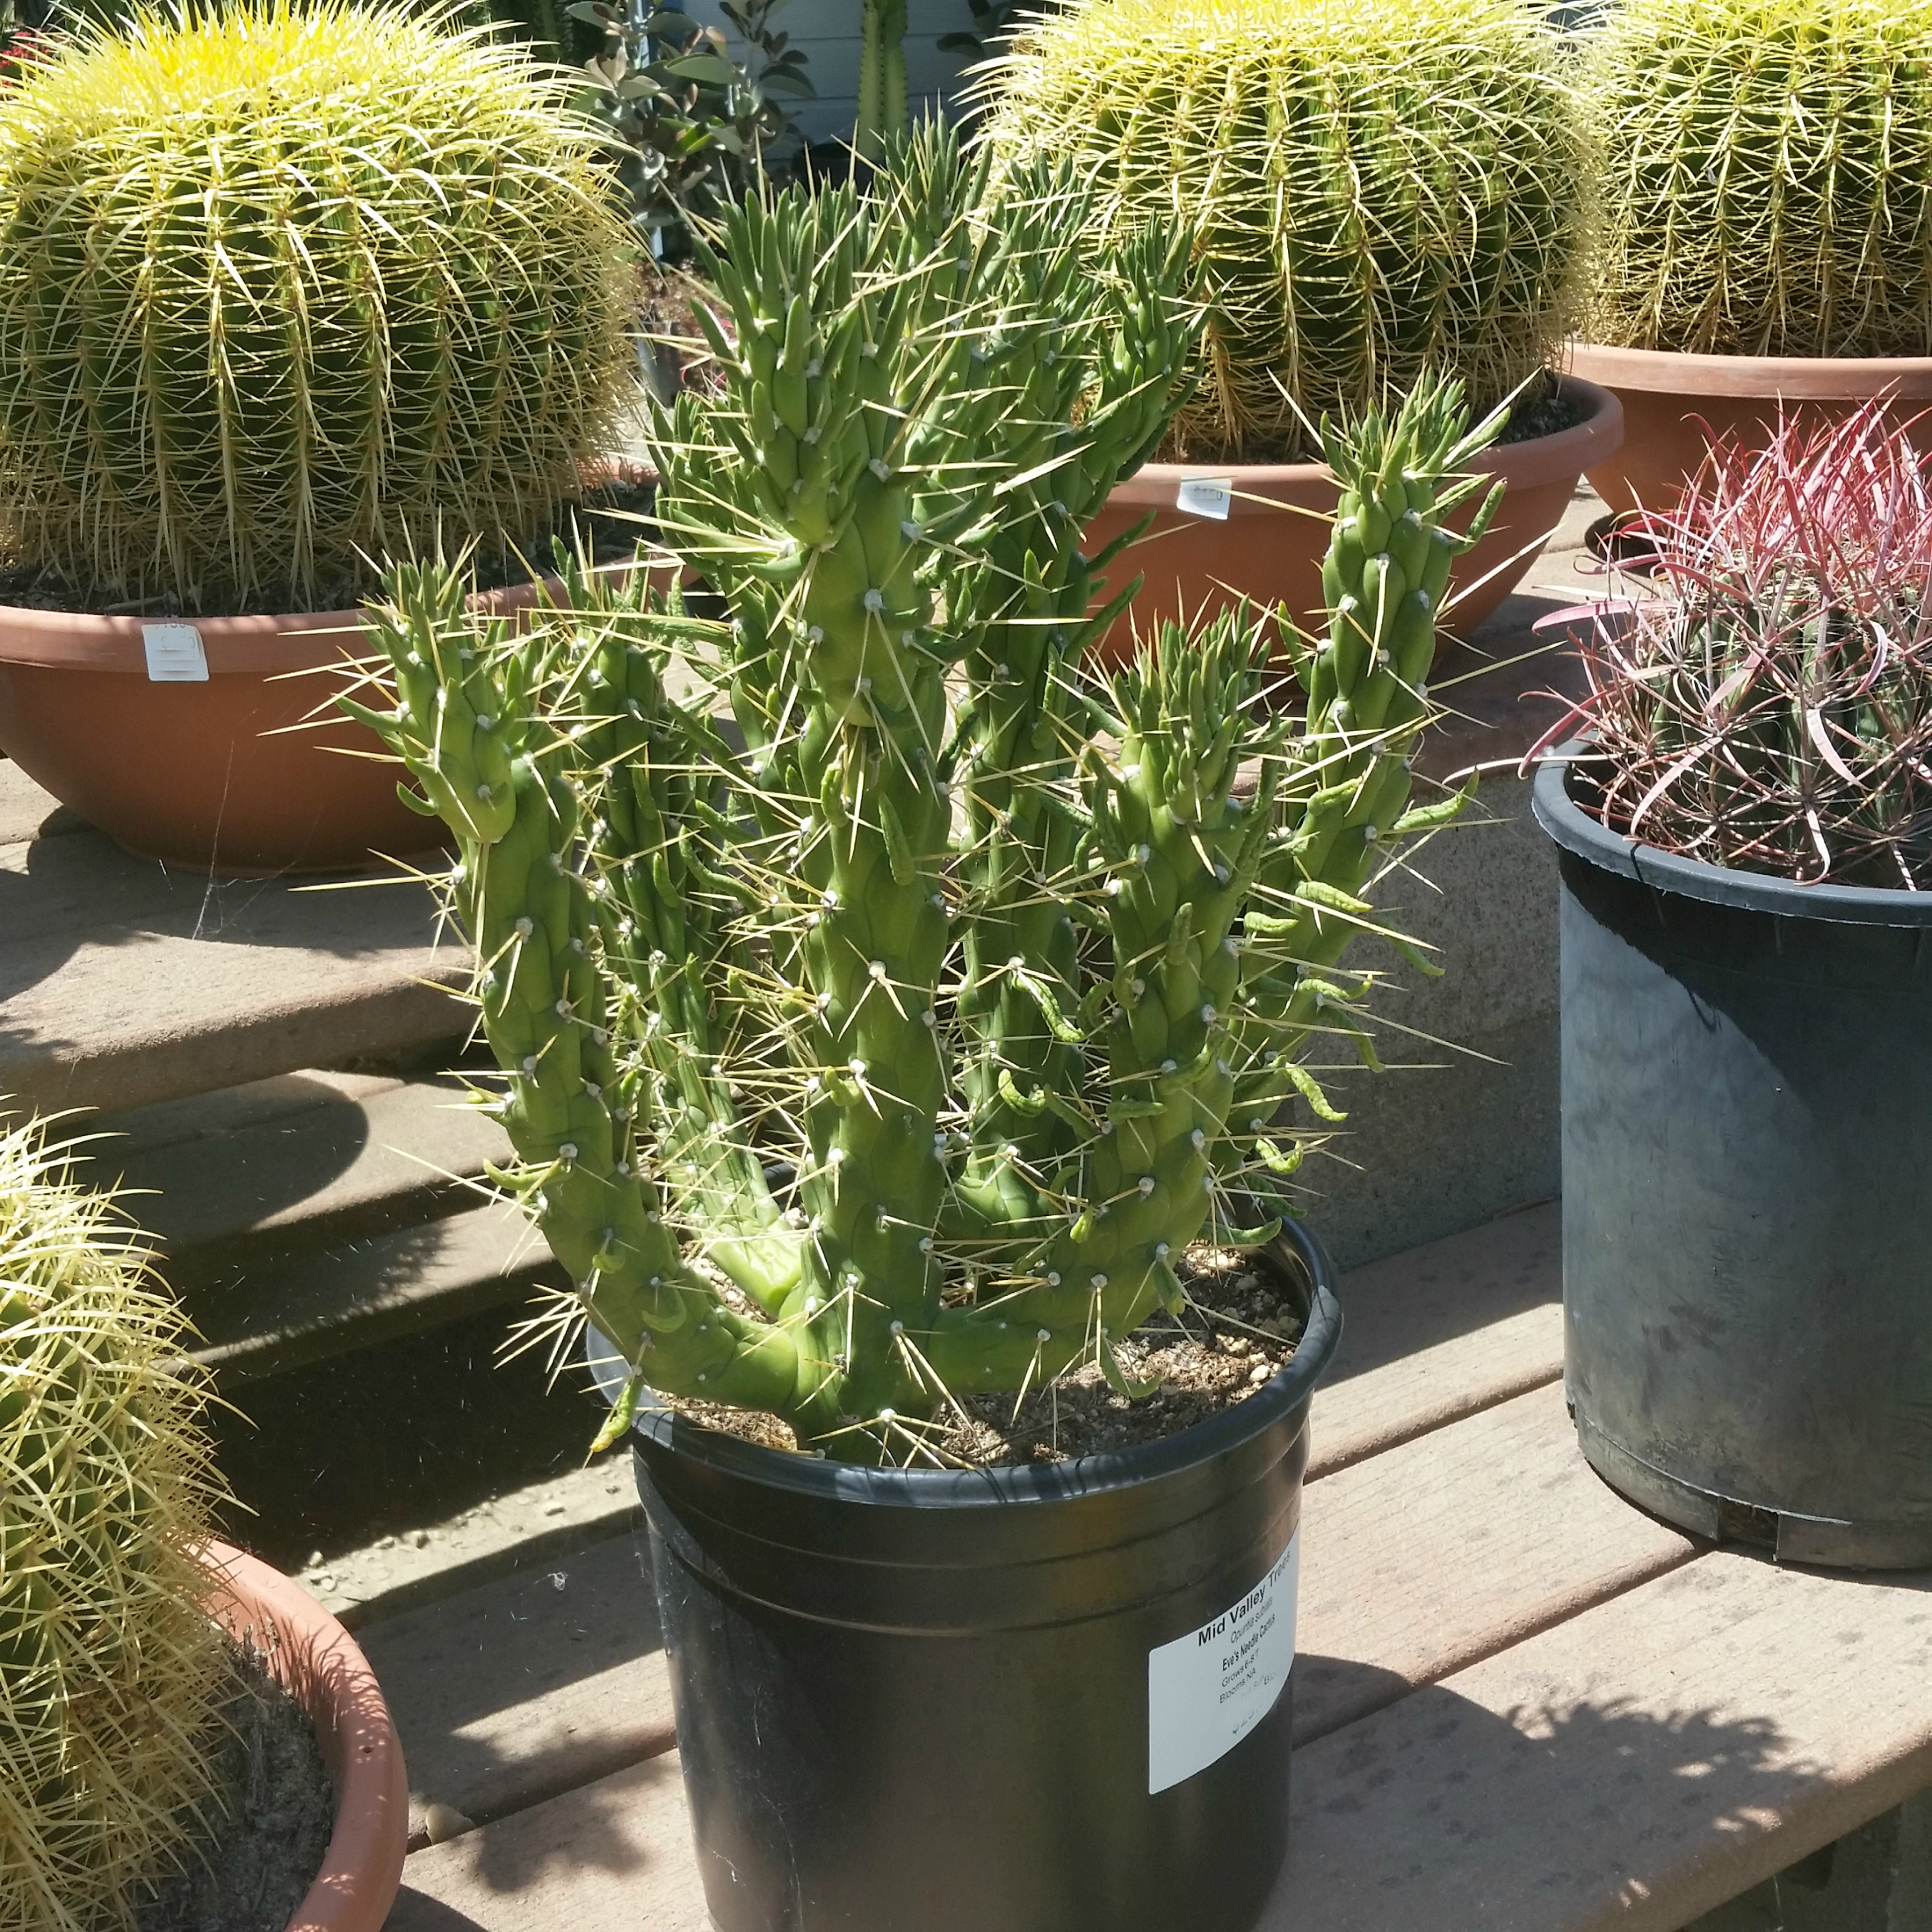 Opuntia Subulata Eve’s Needle Cactus.